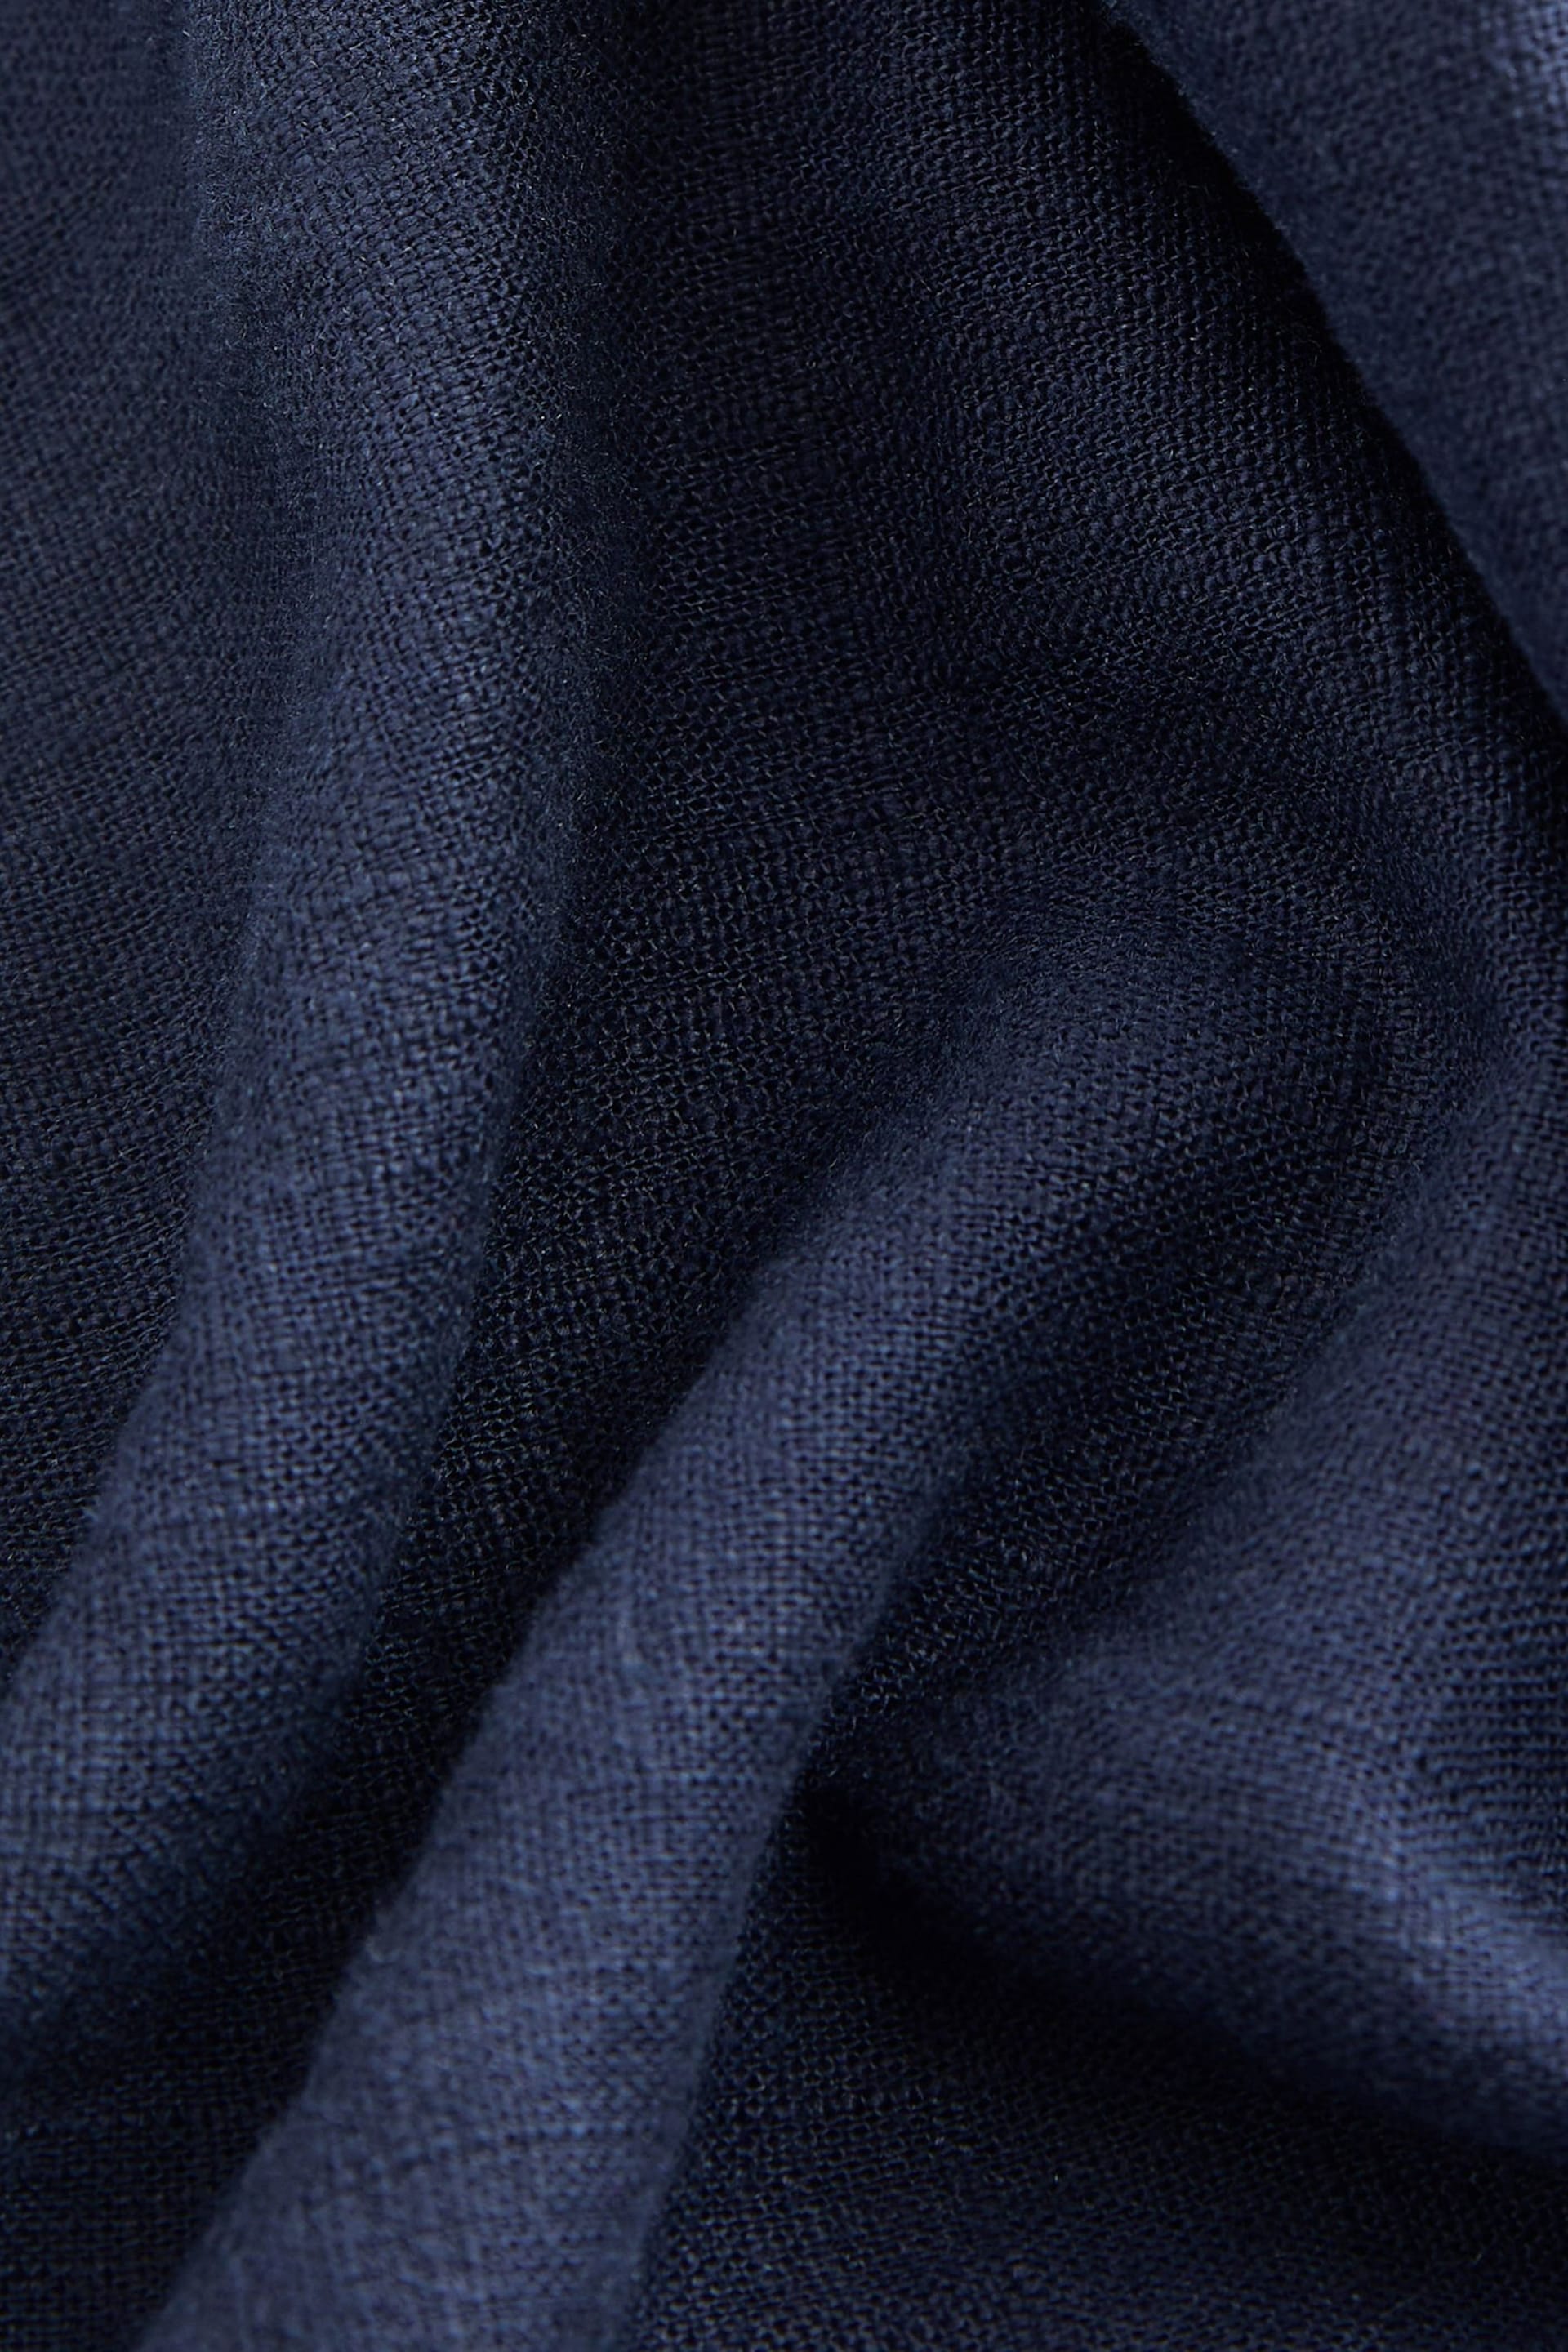 Black/Navy Blue Linen Blend Taper Trousers 2 Pack - Image 13 of 14